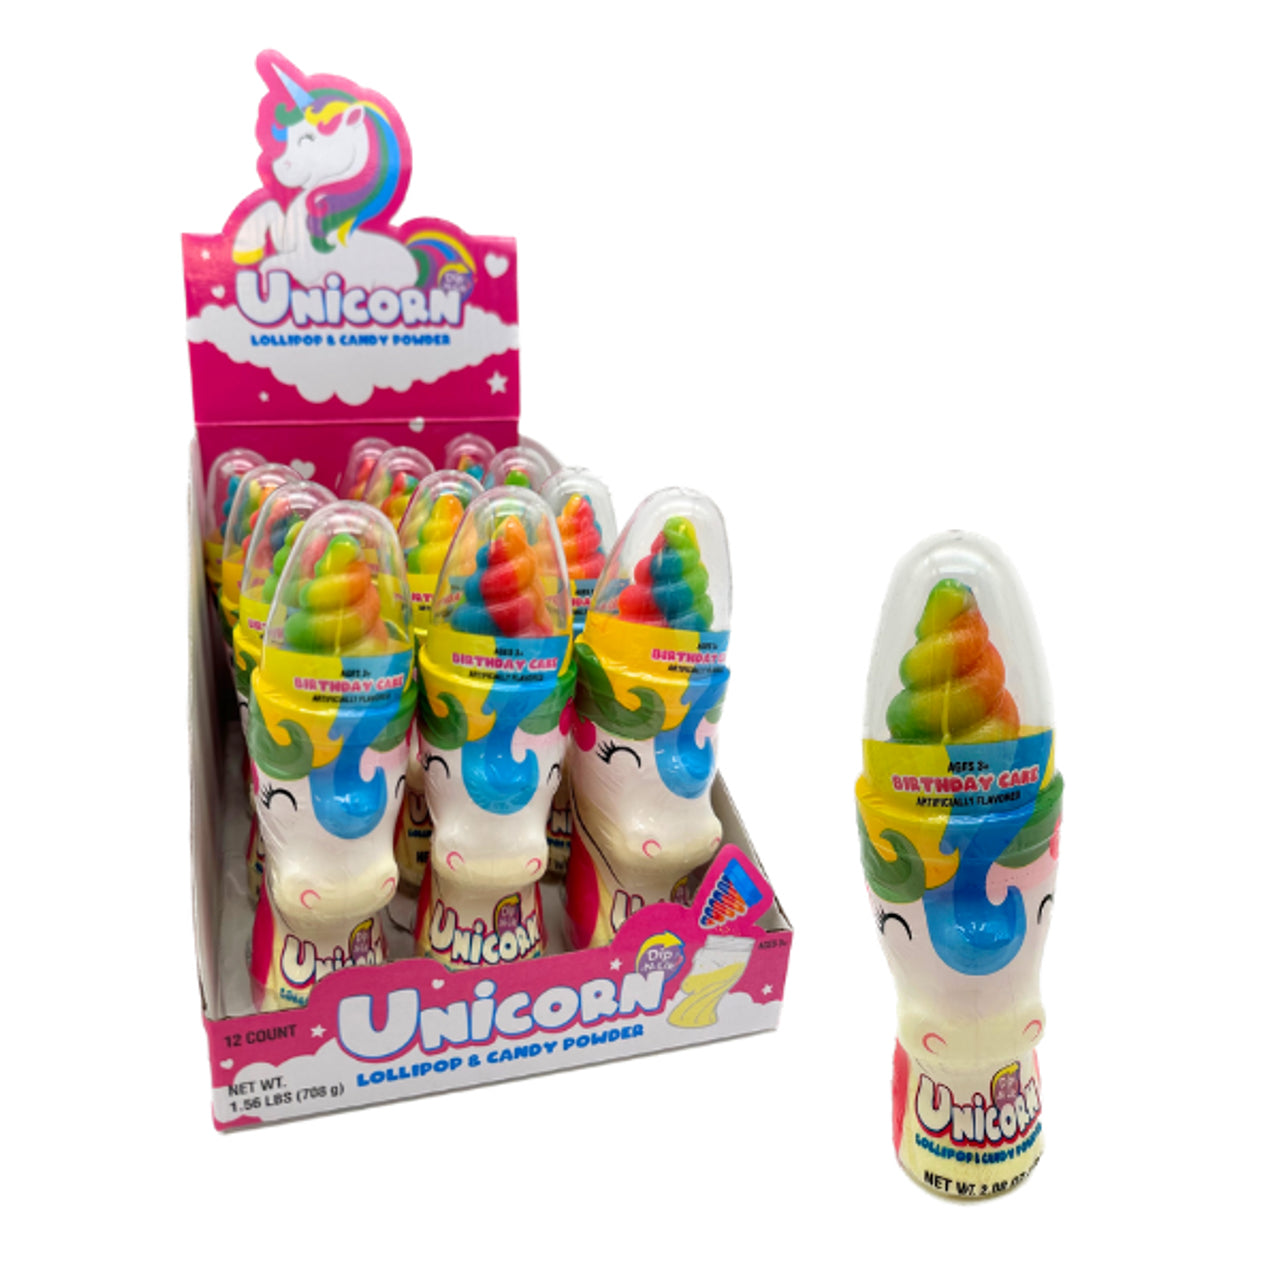 Unicorn Lollipop & Candy Powder